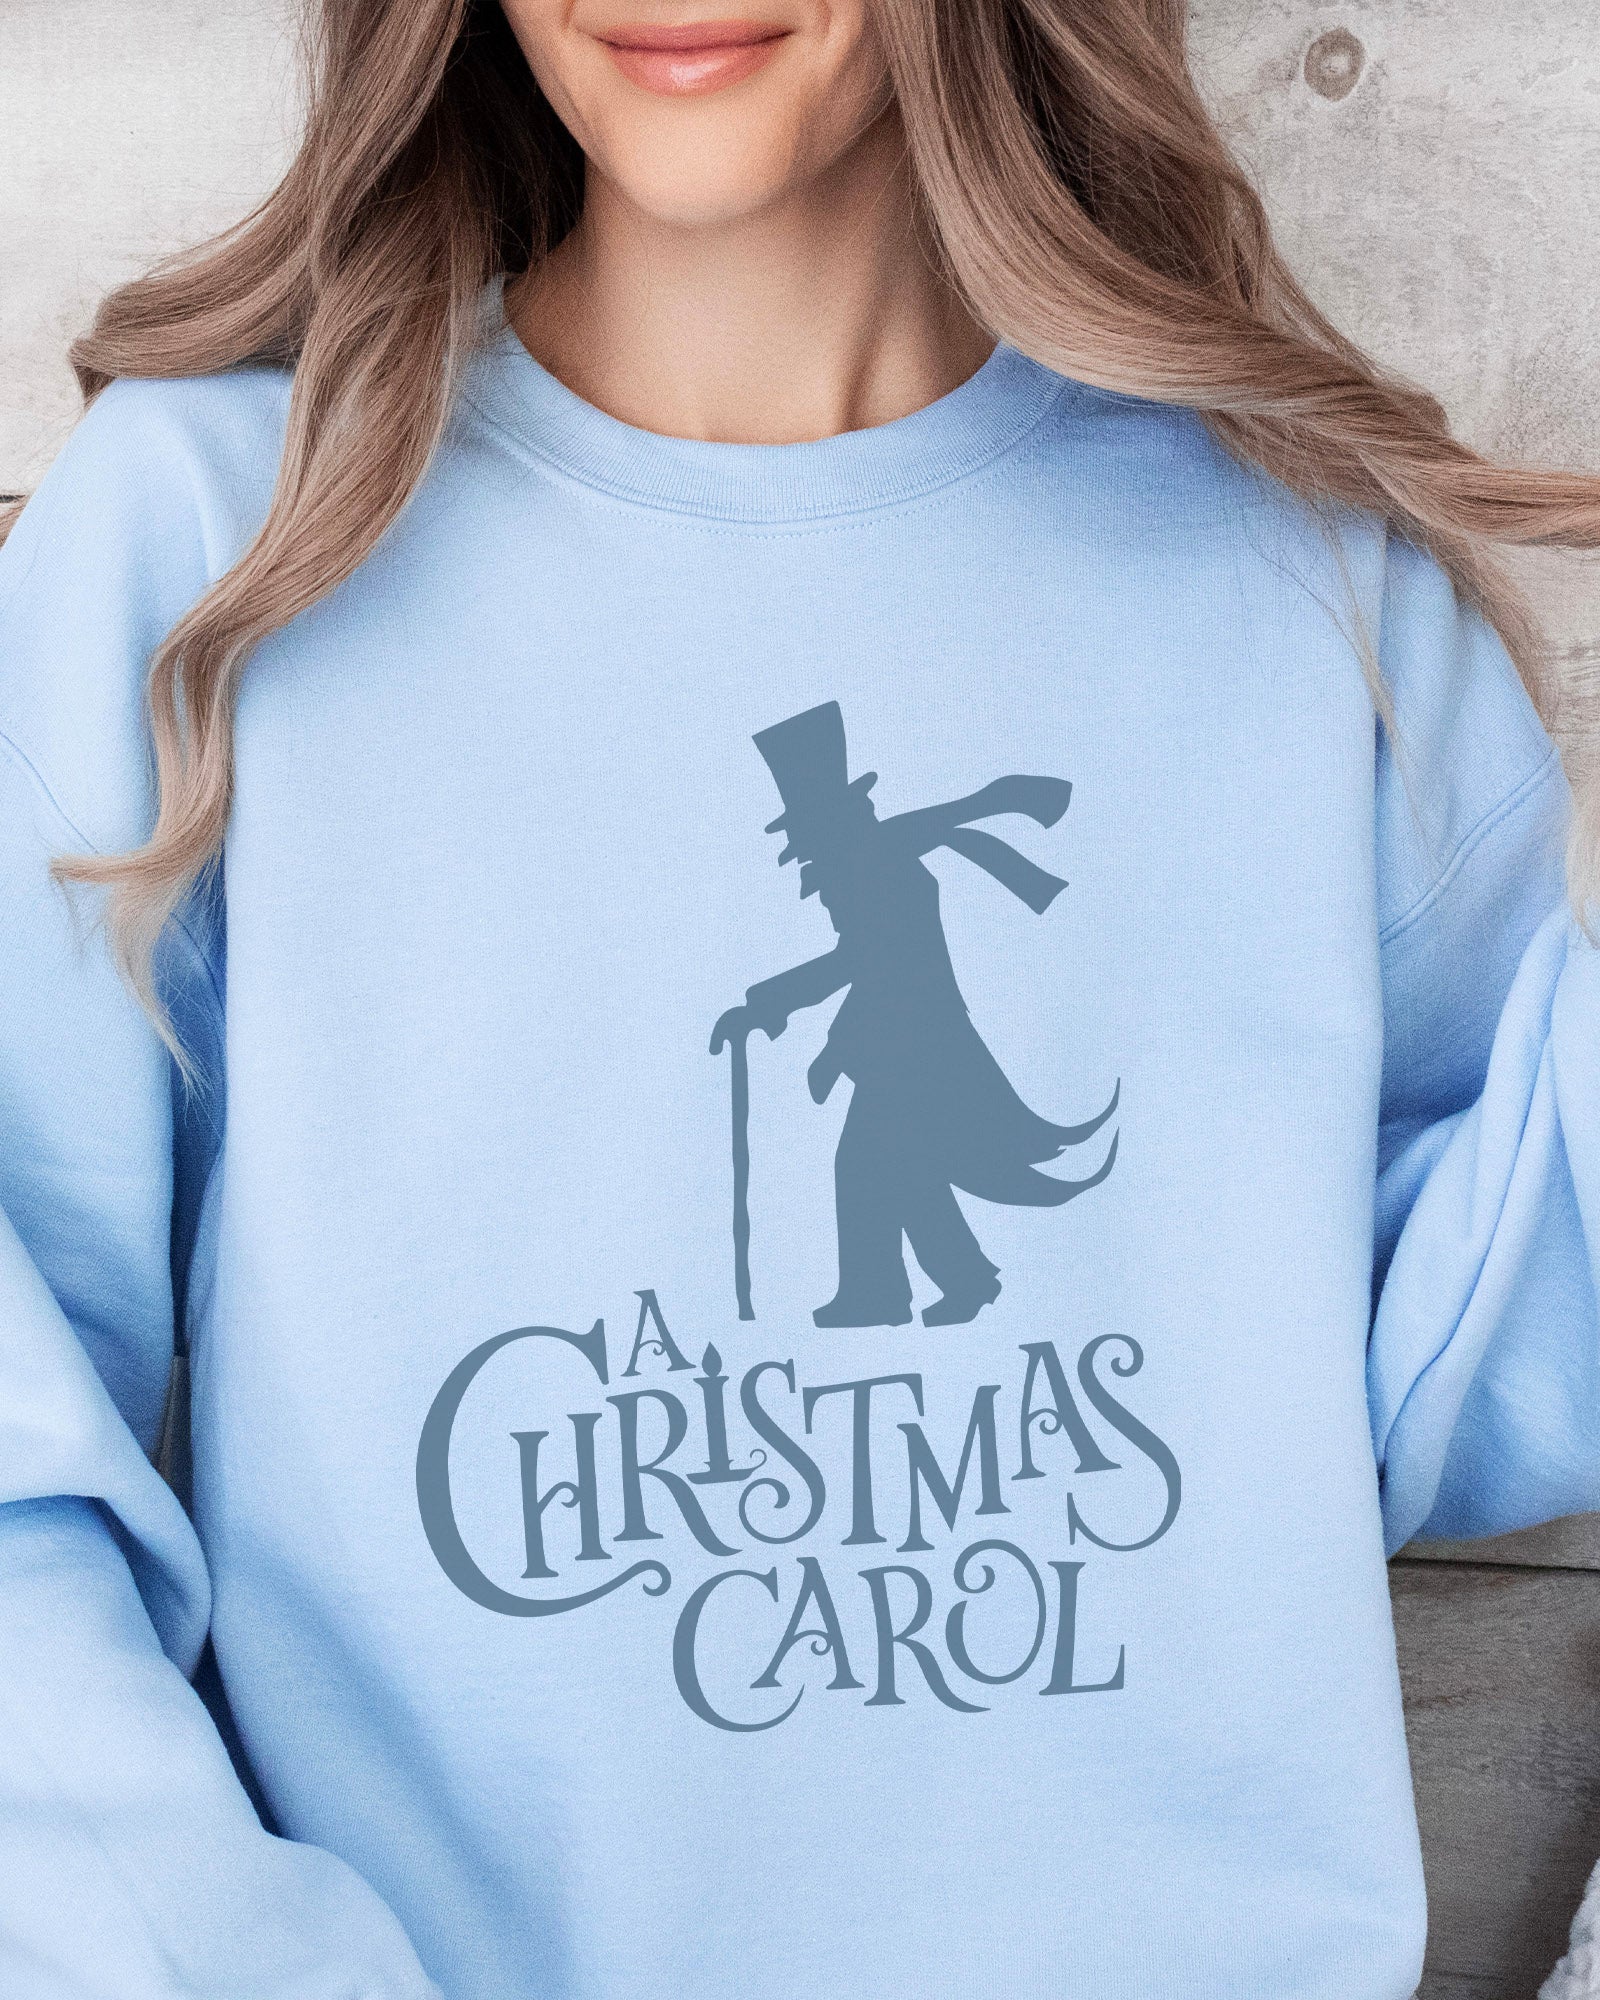 A Christmas Carol Sweatshirt